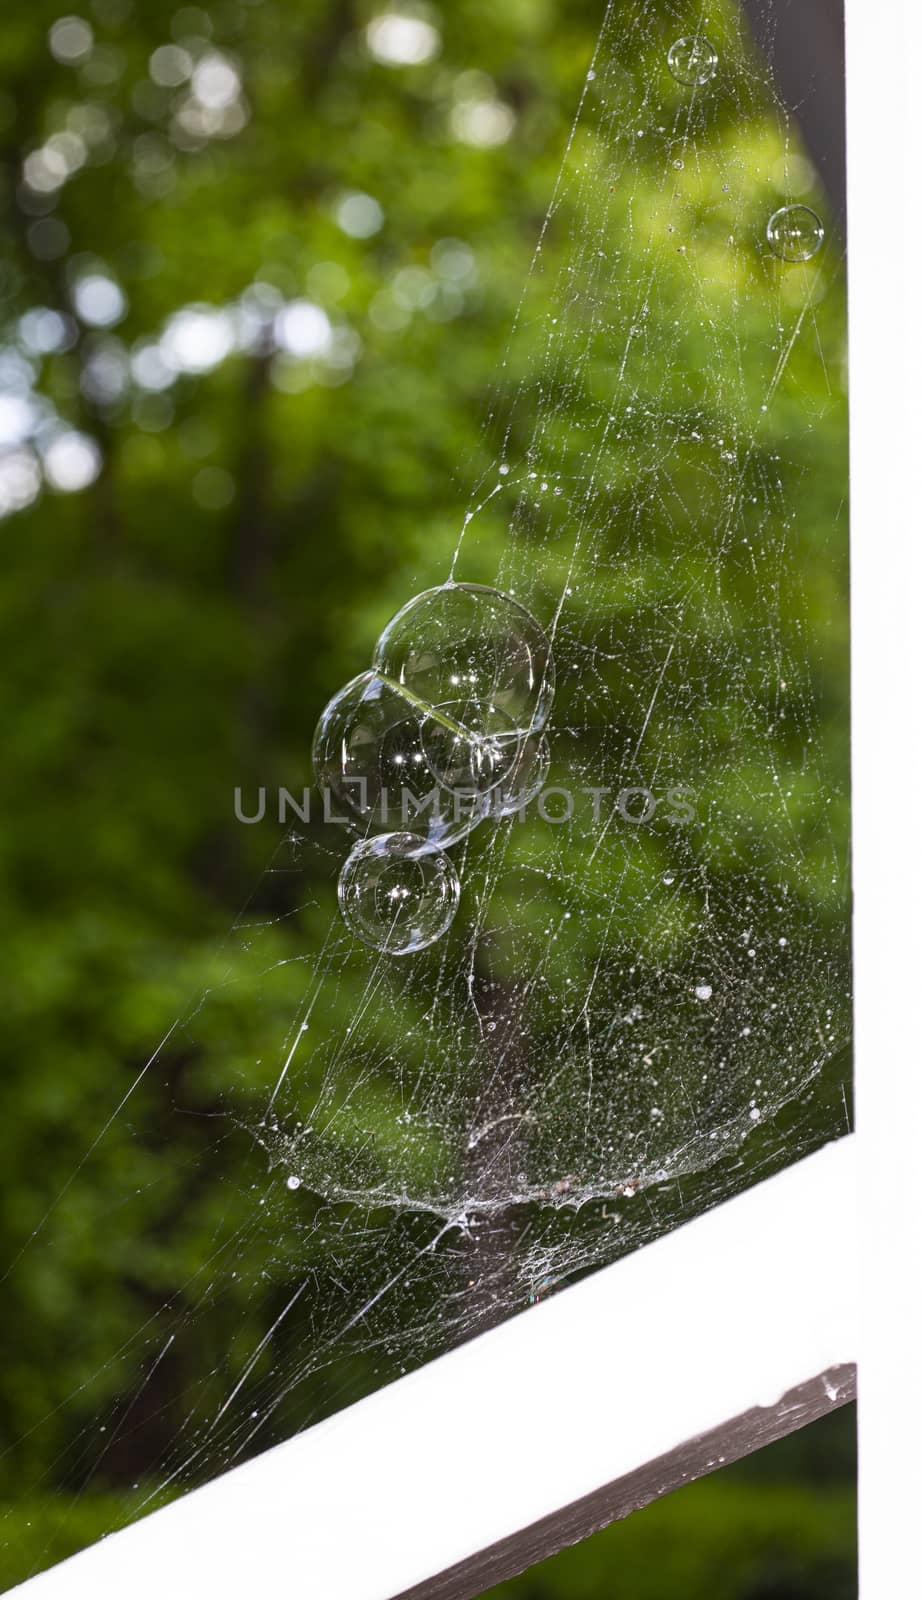 Soap bubbles are trapped in a spider's web.